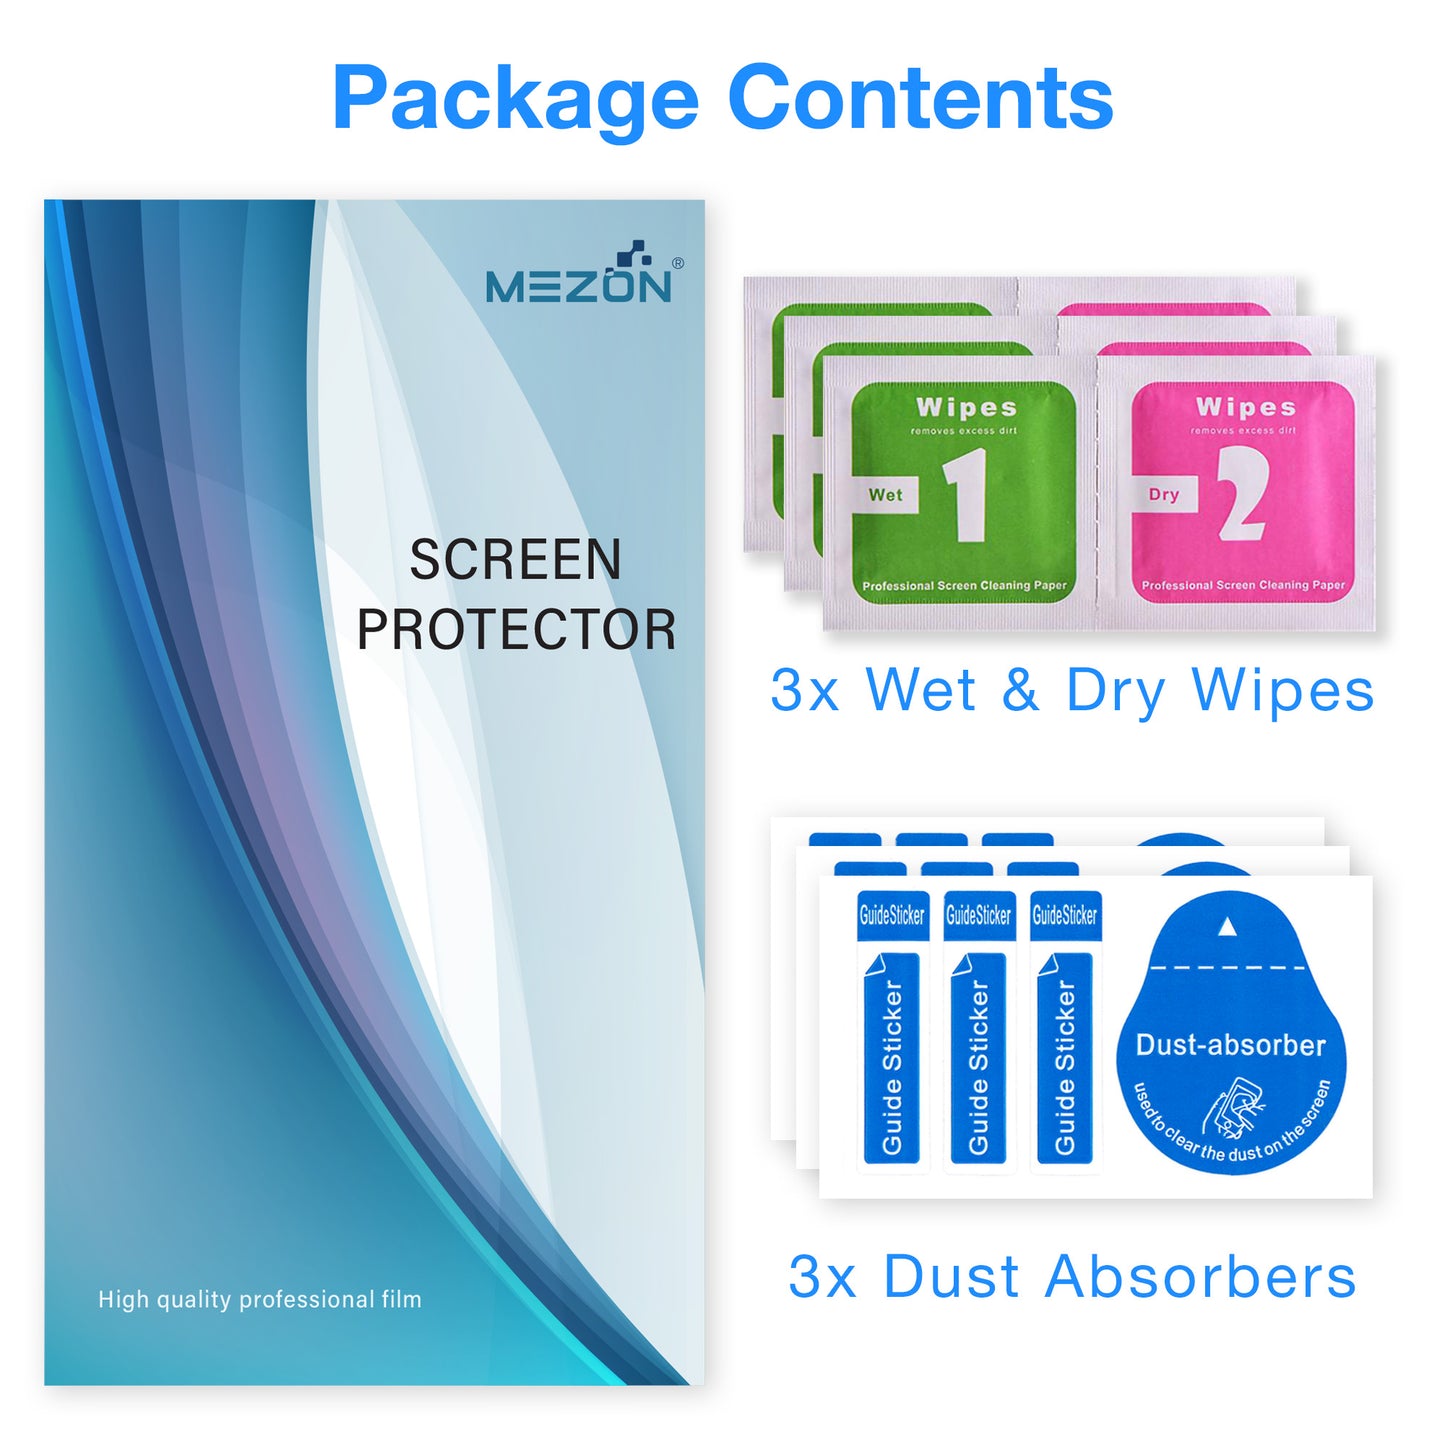 [3 Pack] MEZON Samsung Galaxy A11 Anti-Glare Matte Screen Protector Case Friendly Film (A11, Matte)